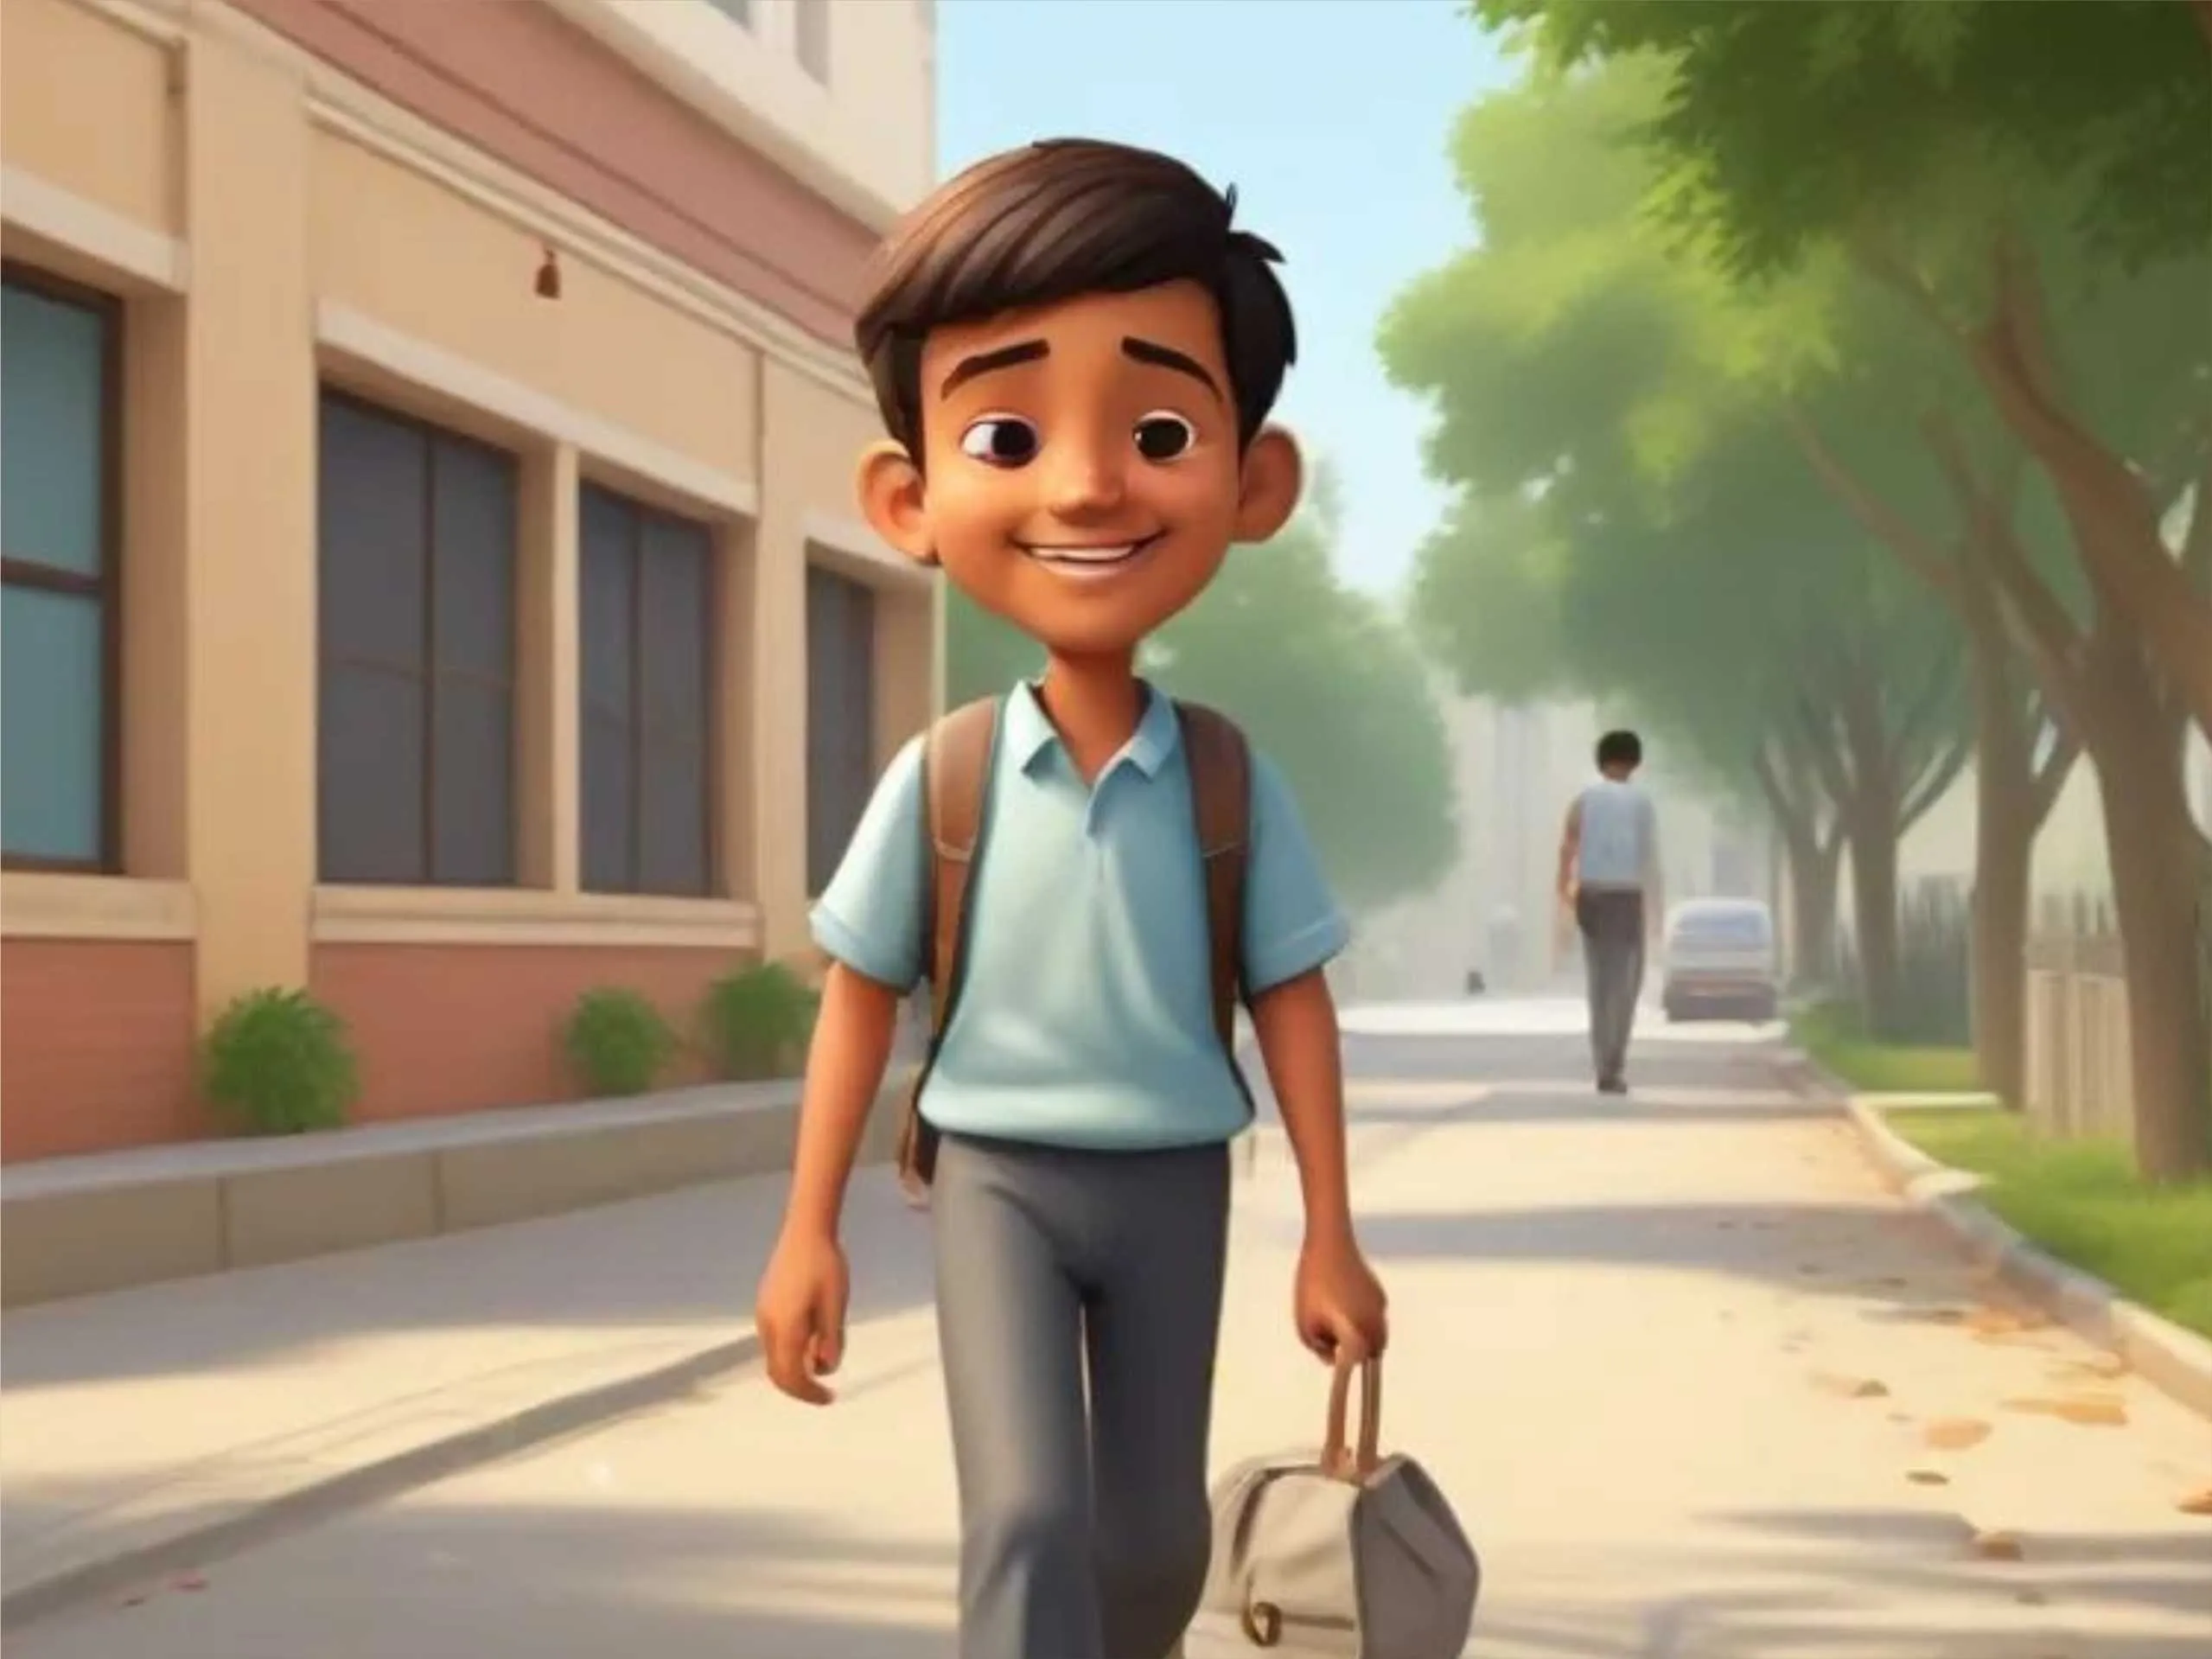 Boy going to school cartoon image